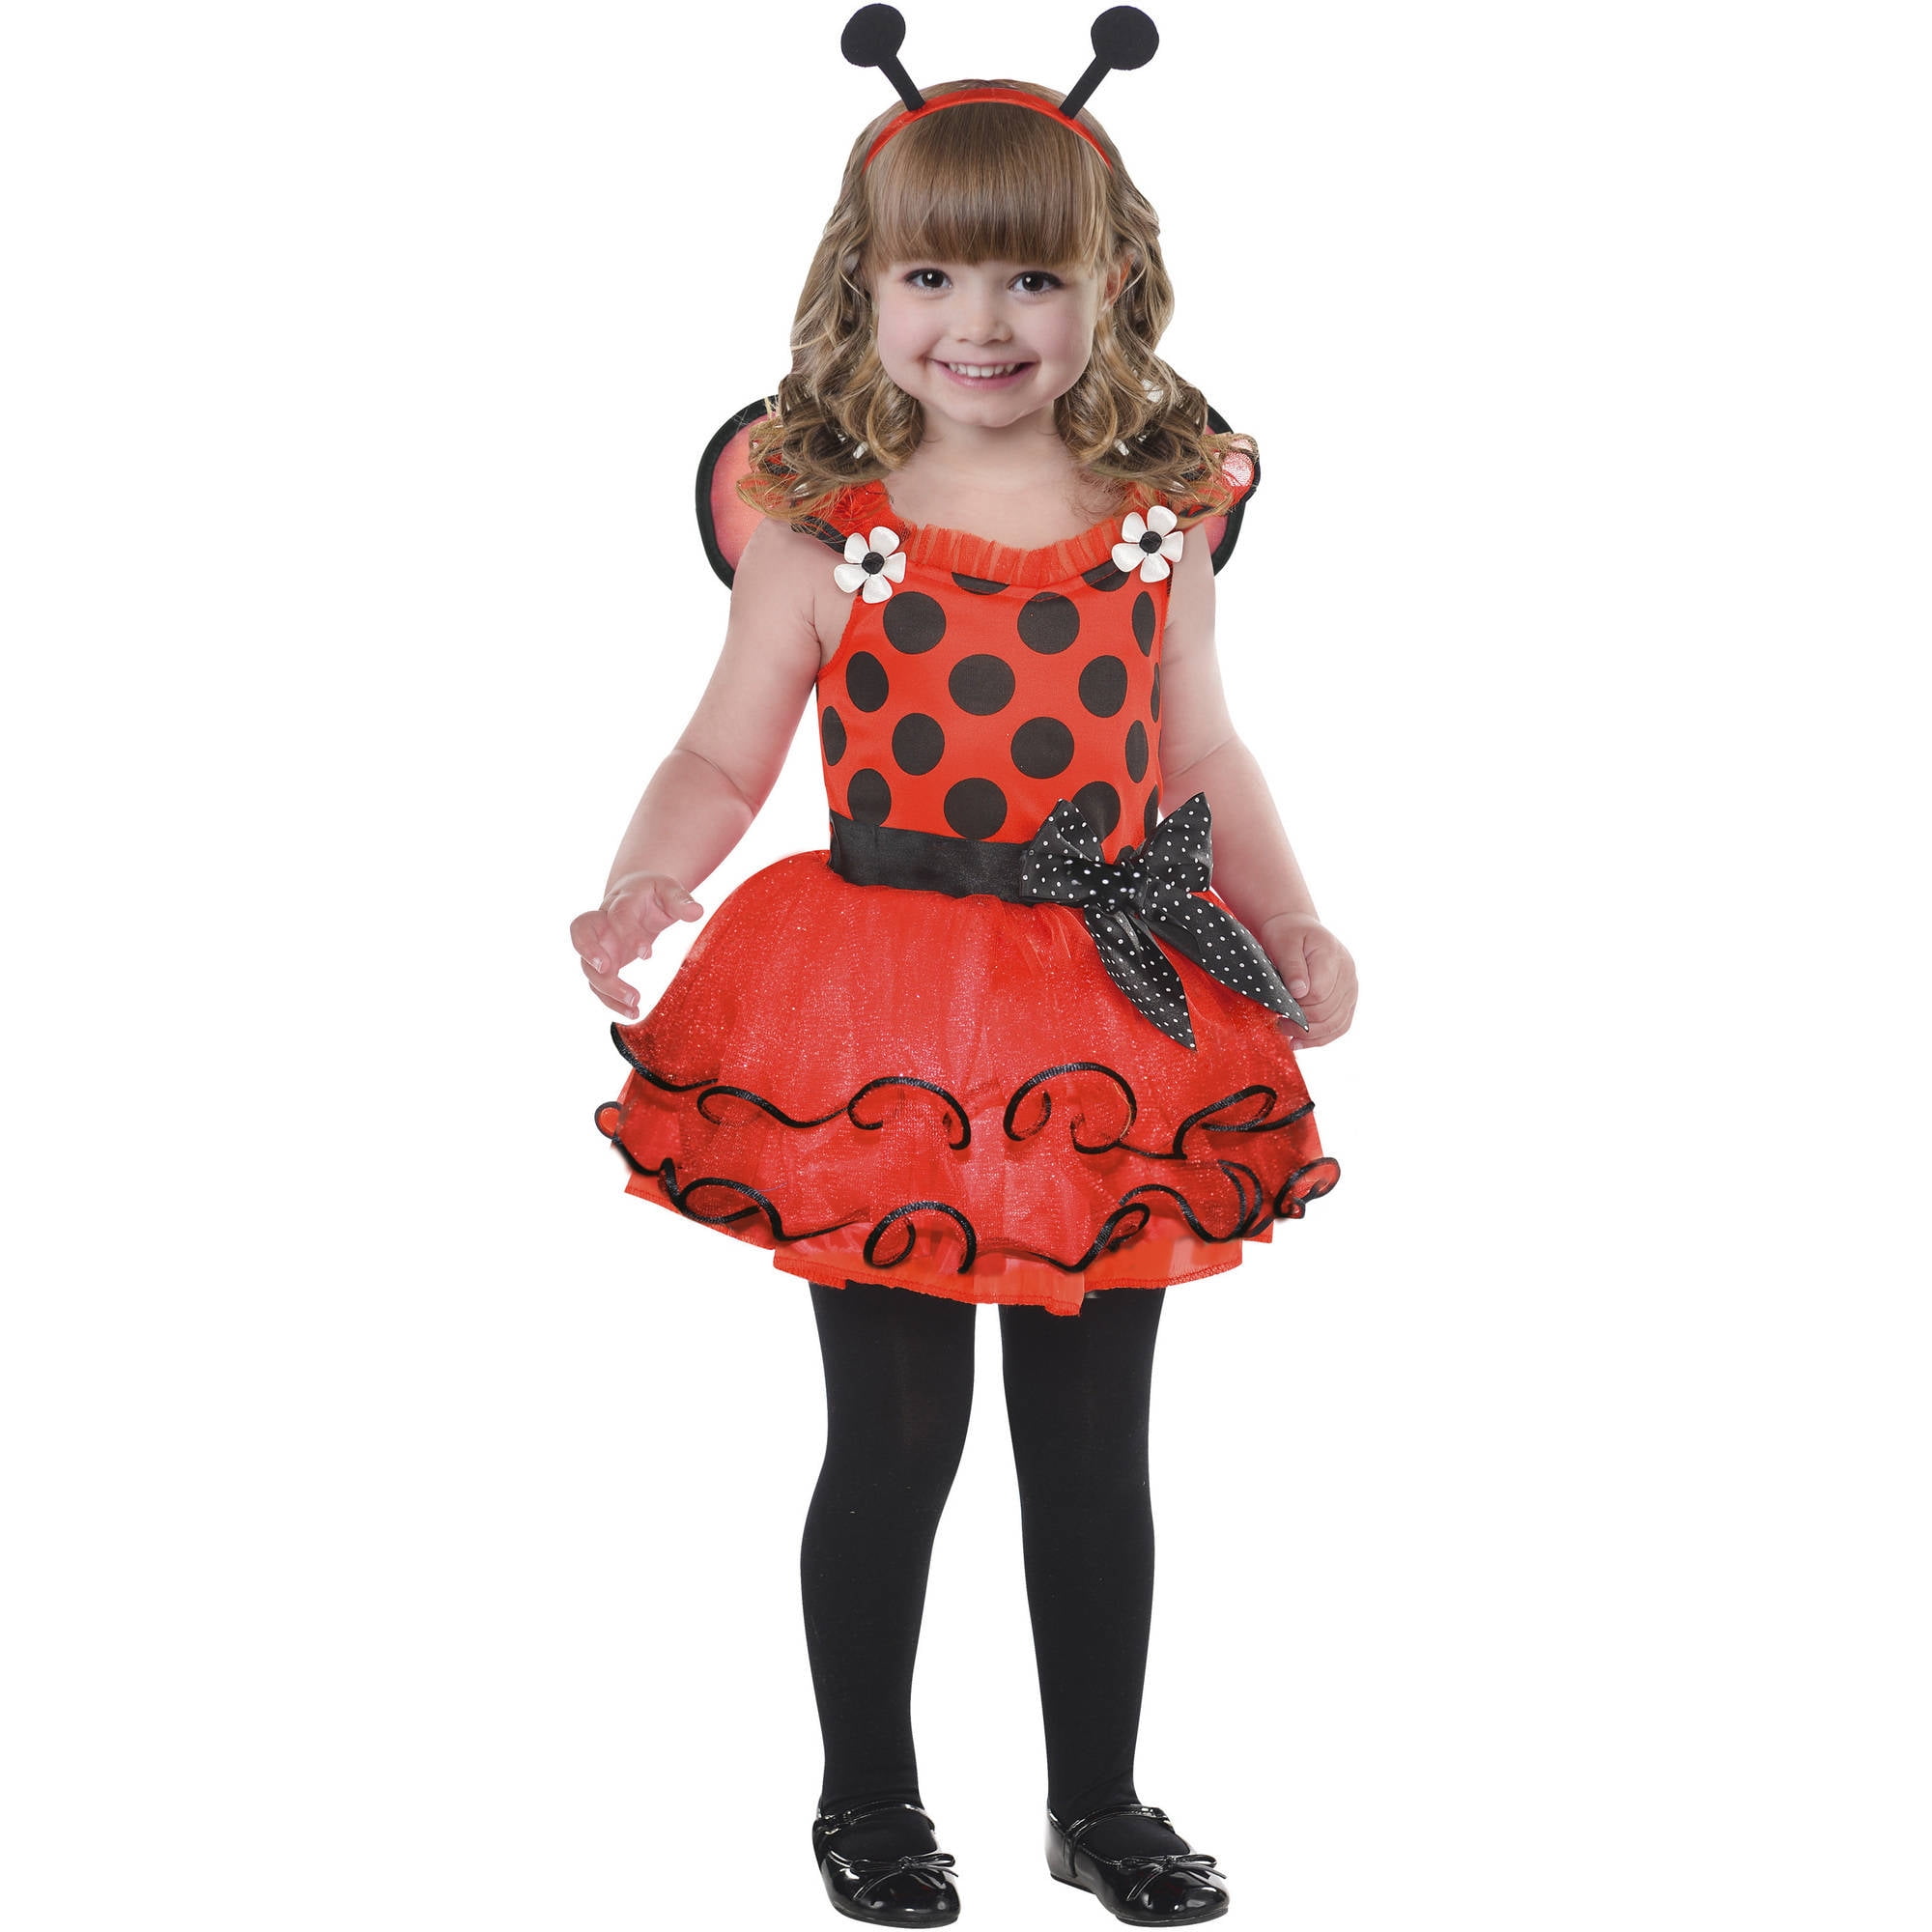  Little  Lady Bug Toddler Halloween  Costume  Walmart com 